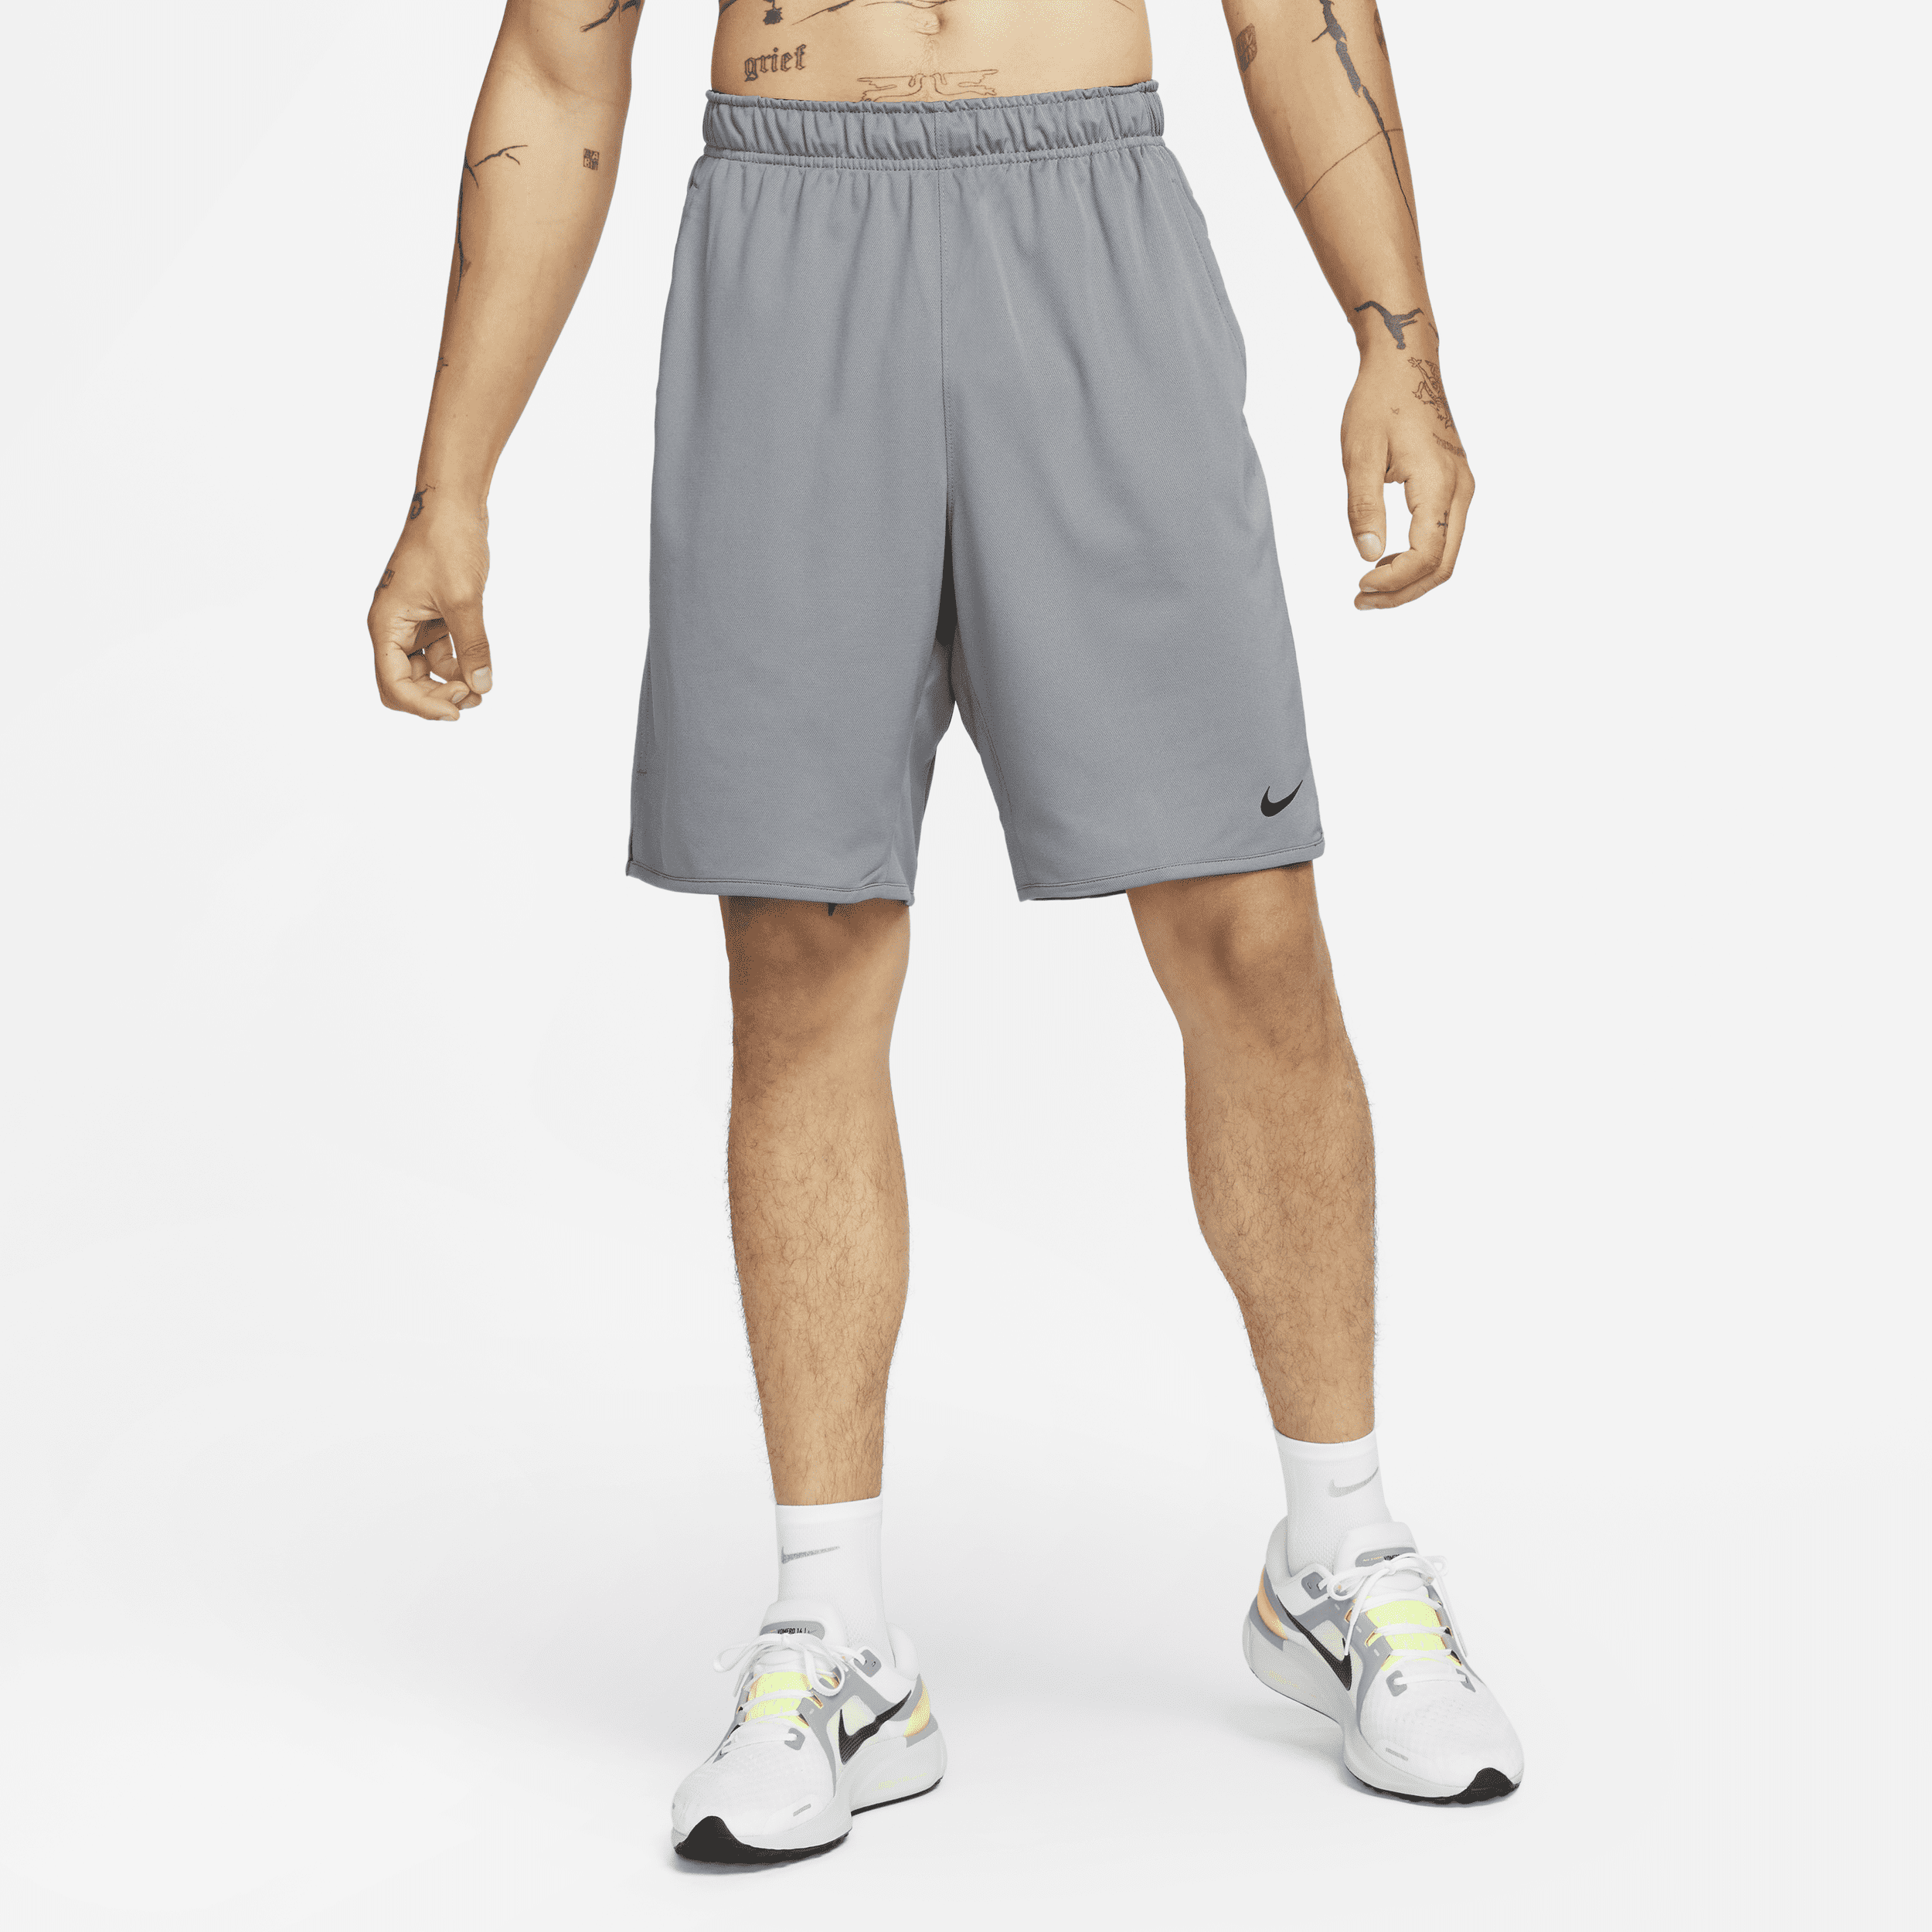 Nike Totality multifunctionele niet-gevoerde herenshorts met Dri-FIT (23 cm) - Grijs